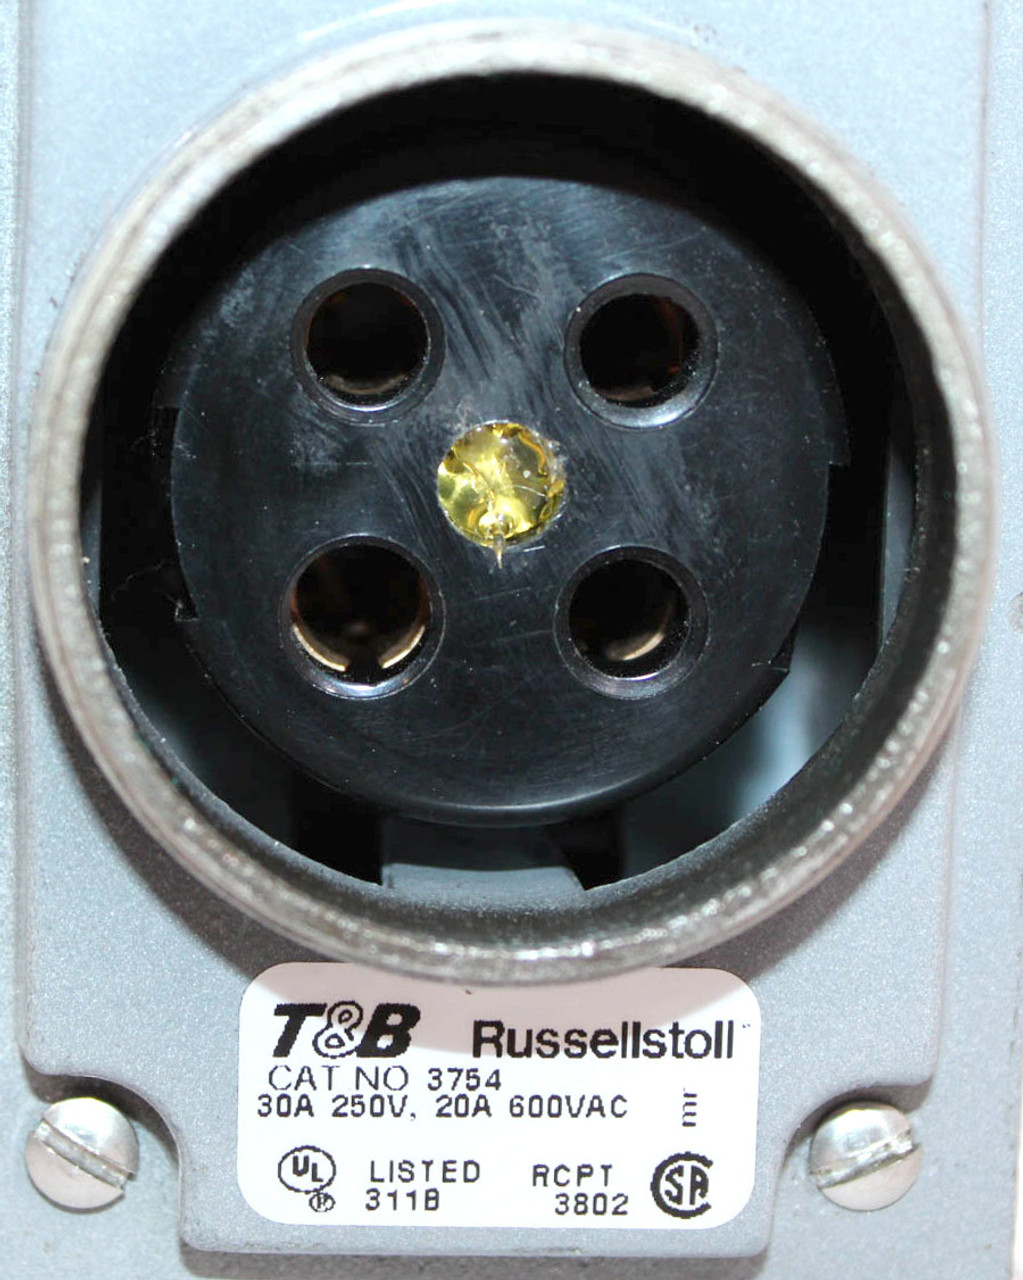 TB Russellstoll 3754 Receptacle Box 30A 250V 20A 600V